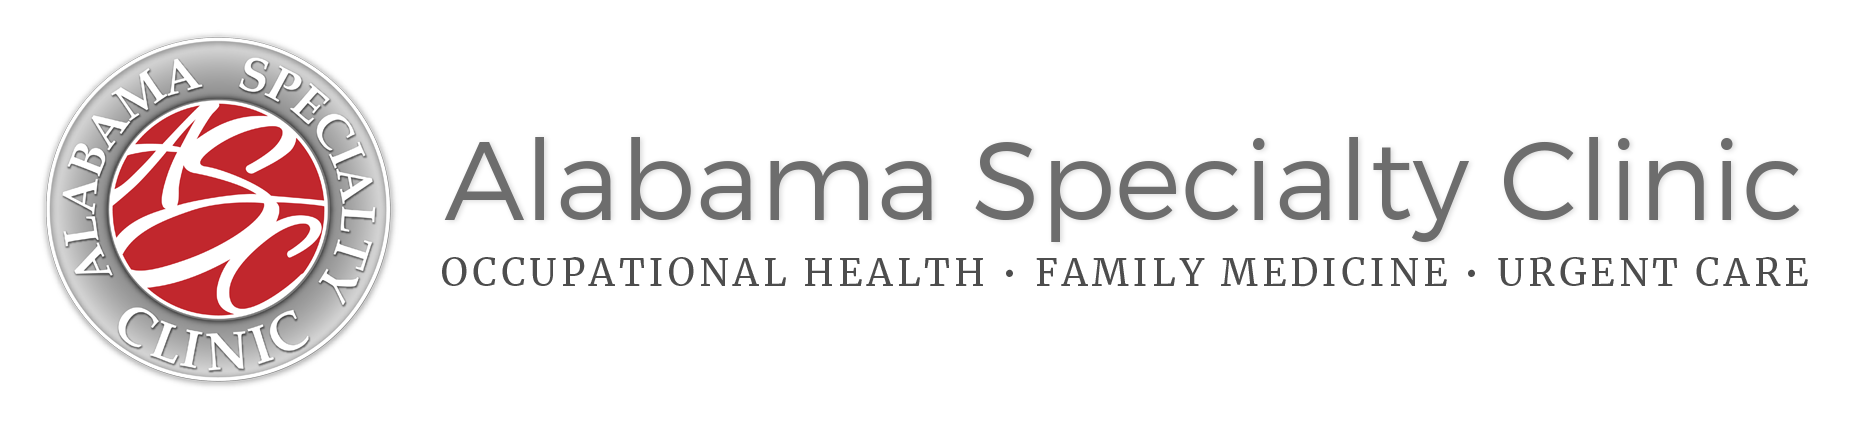 Alabama Specialty Clinic